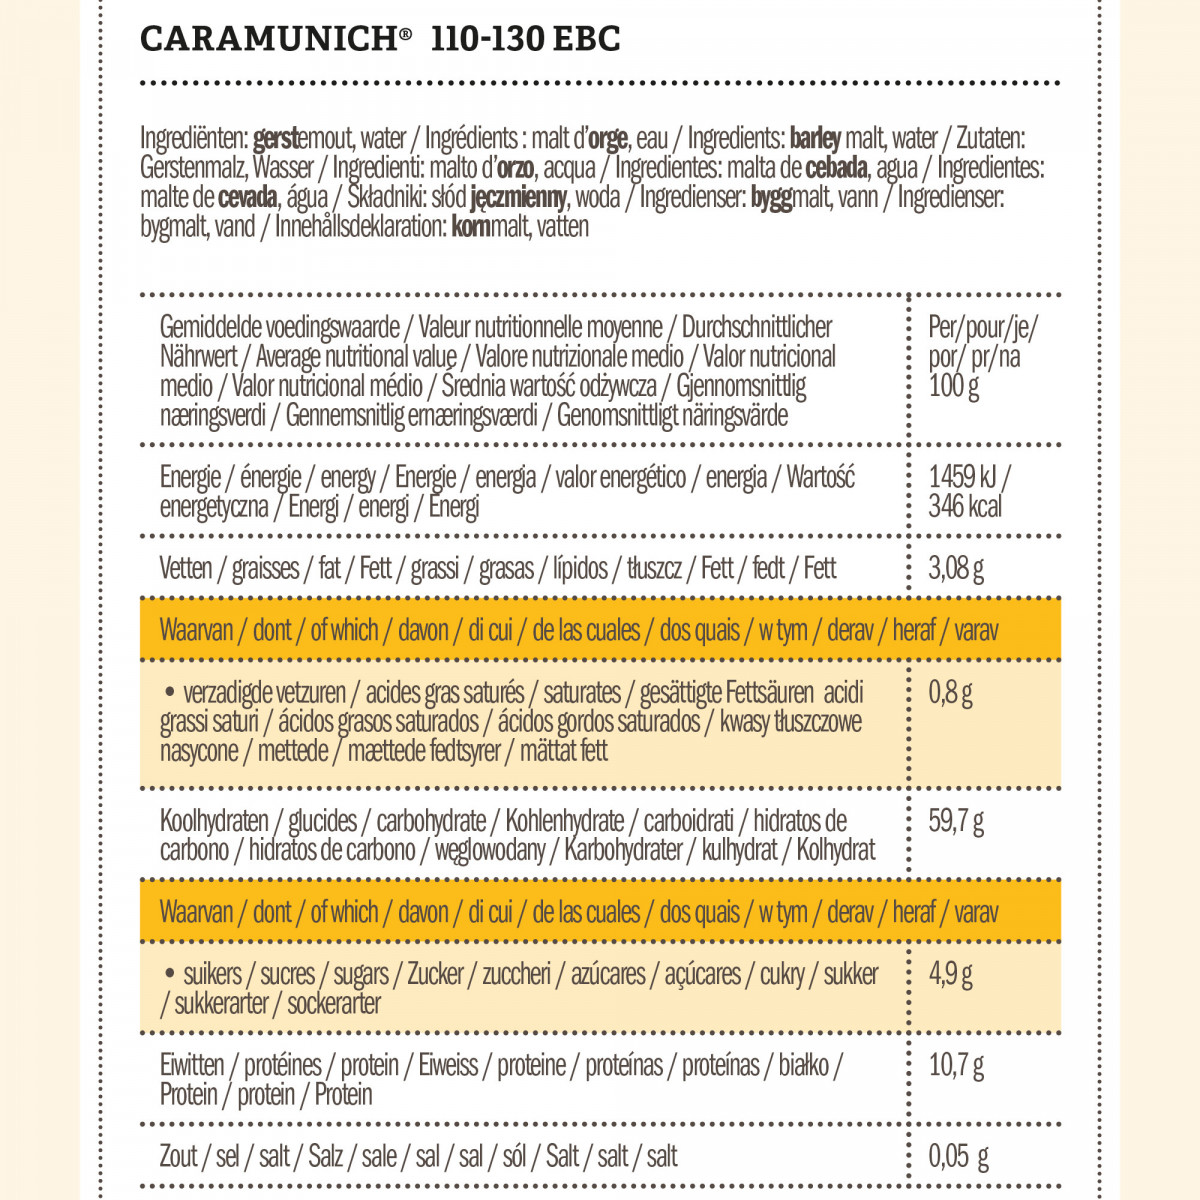 Weyermann® CaraMunich® type 2 110-130 EBC 1 kg